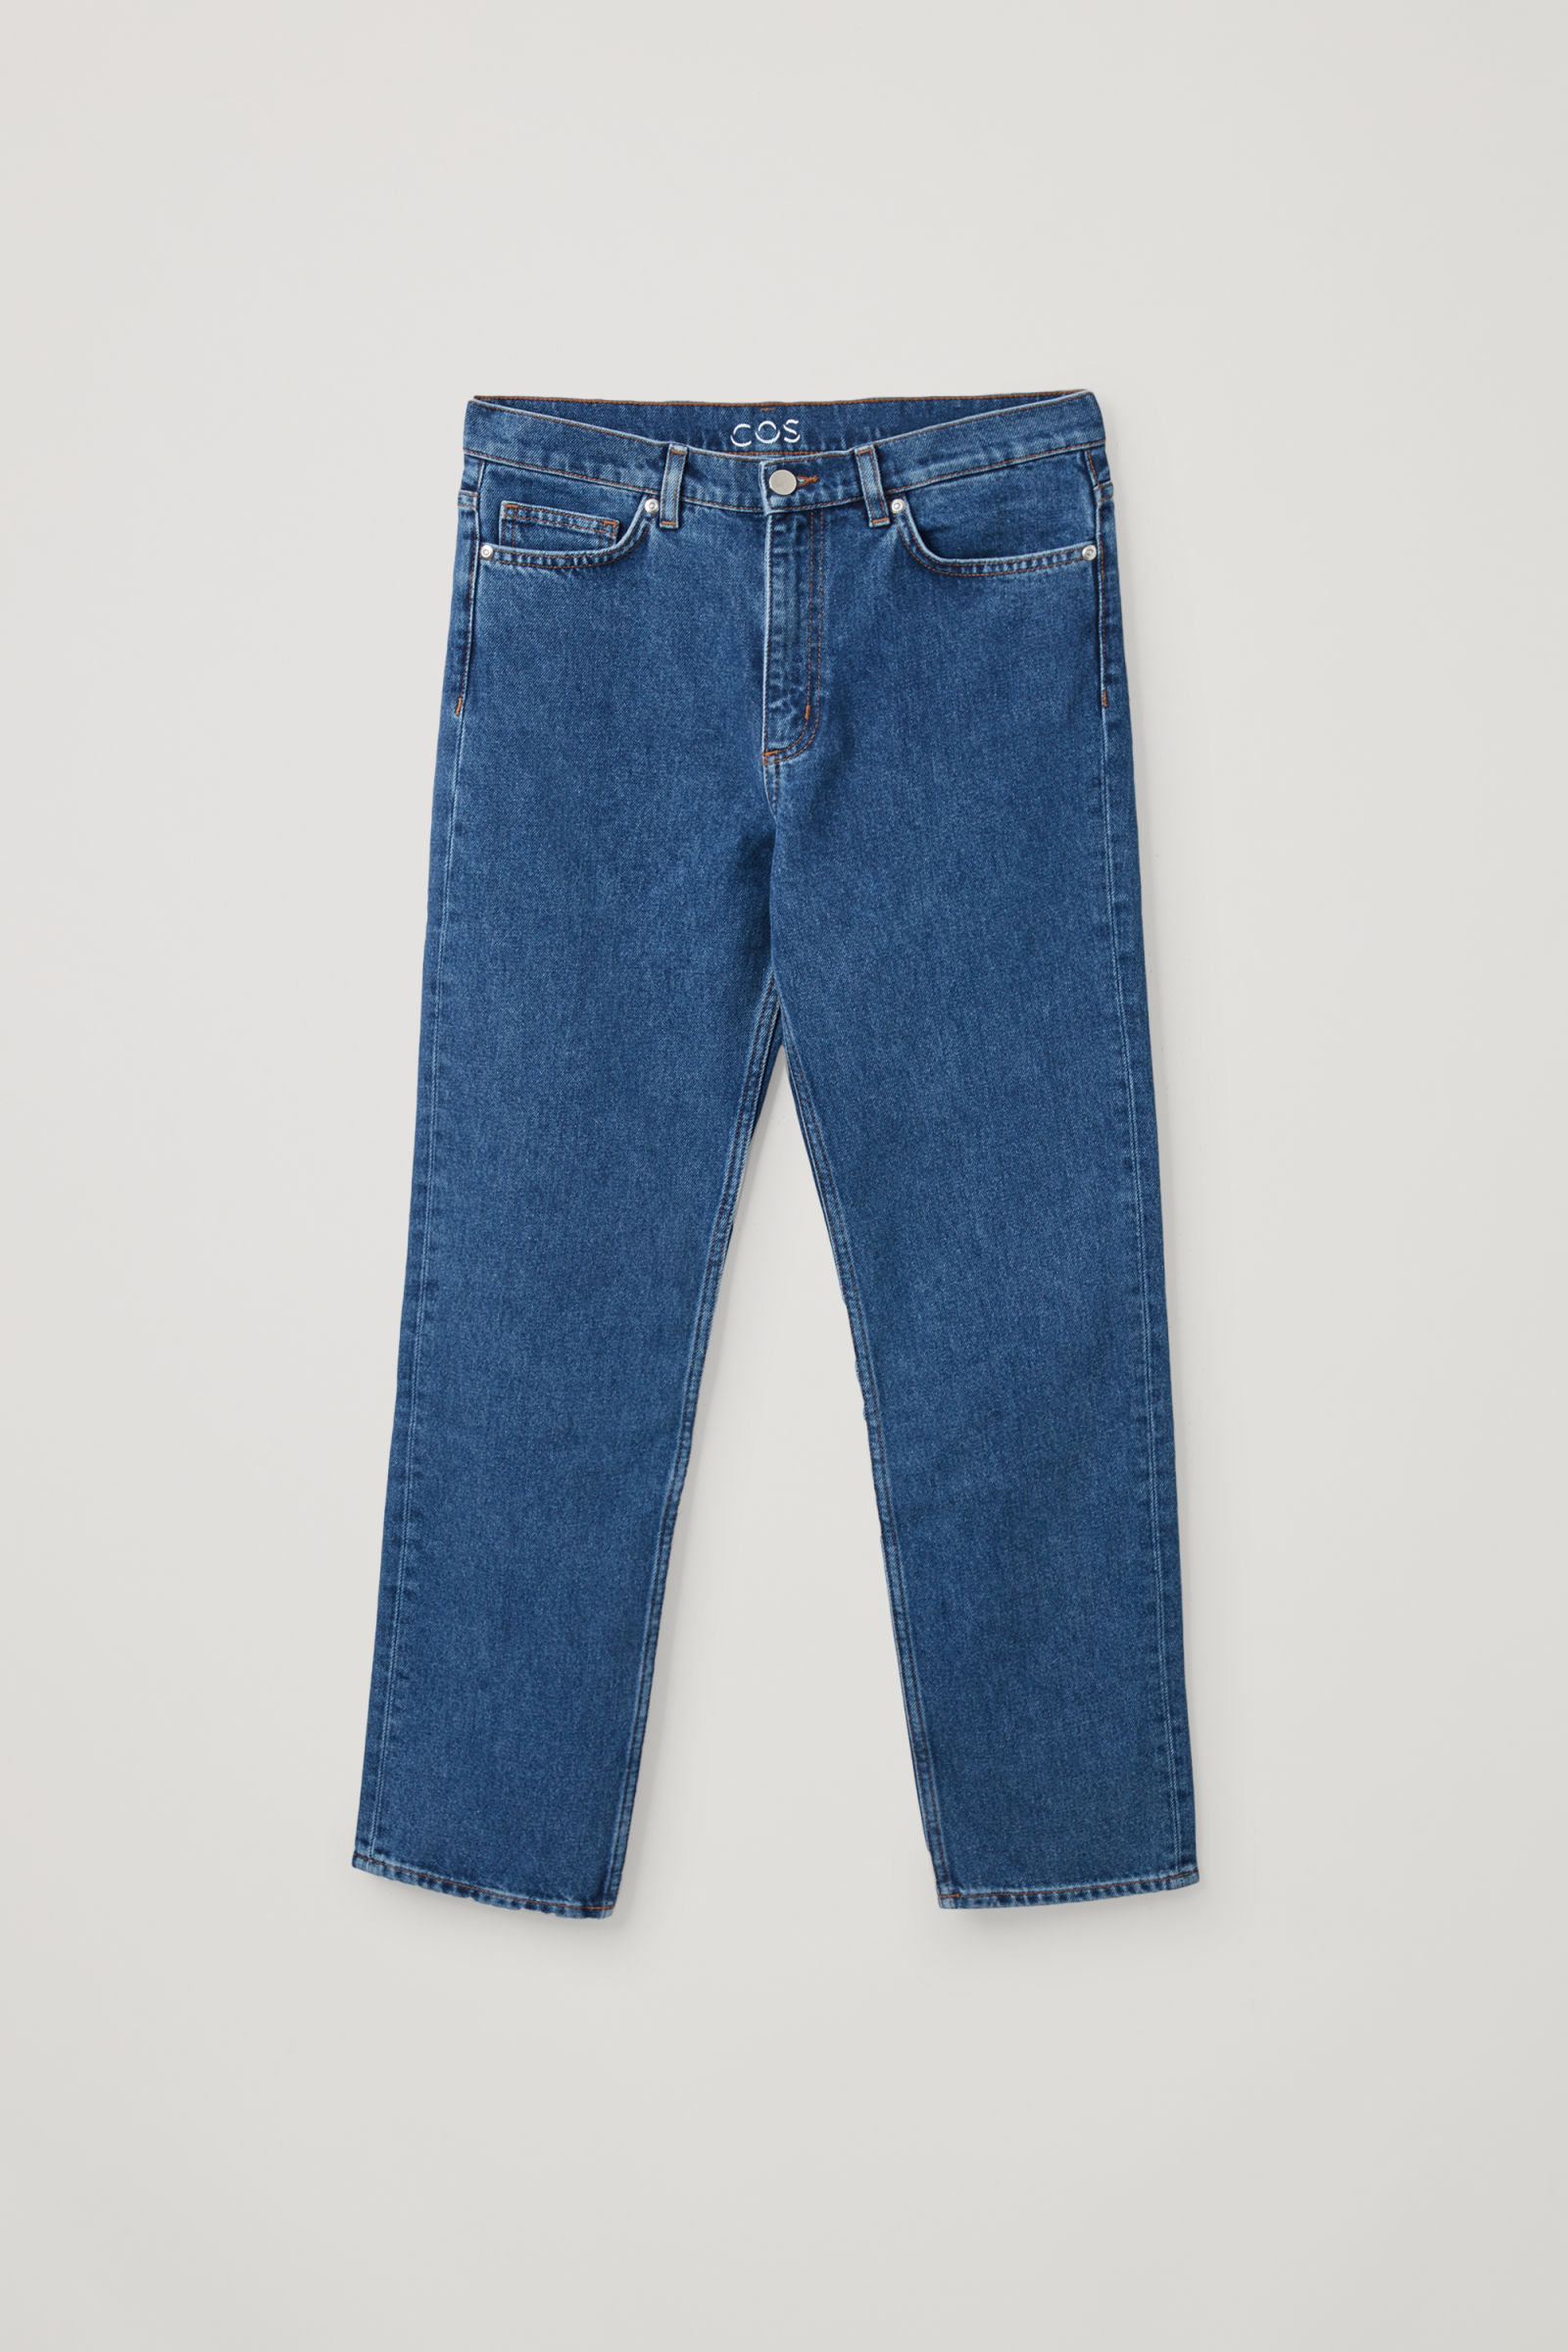 Shopping | The New Shape of Denim: Good-Bye Skinny Jeans